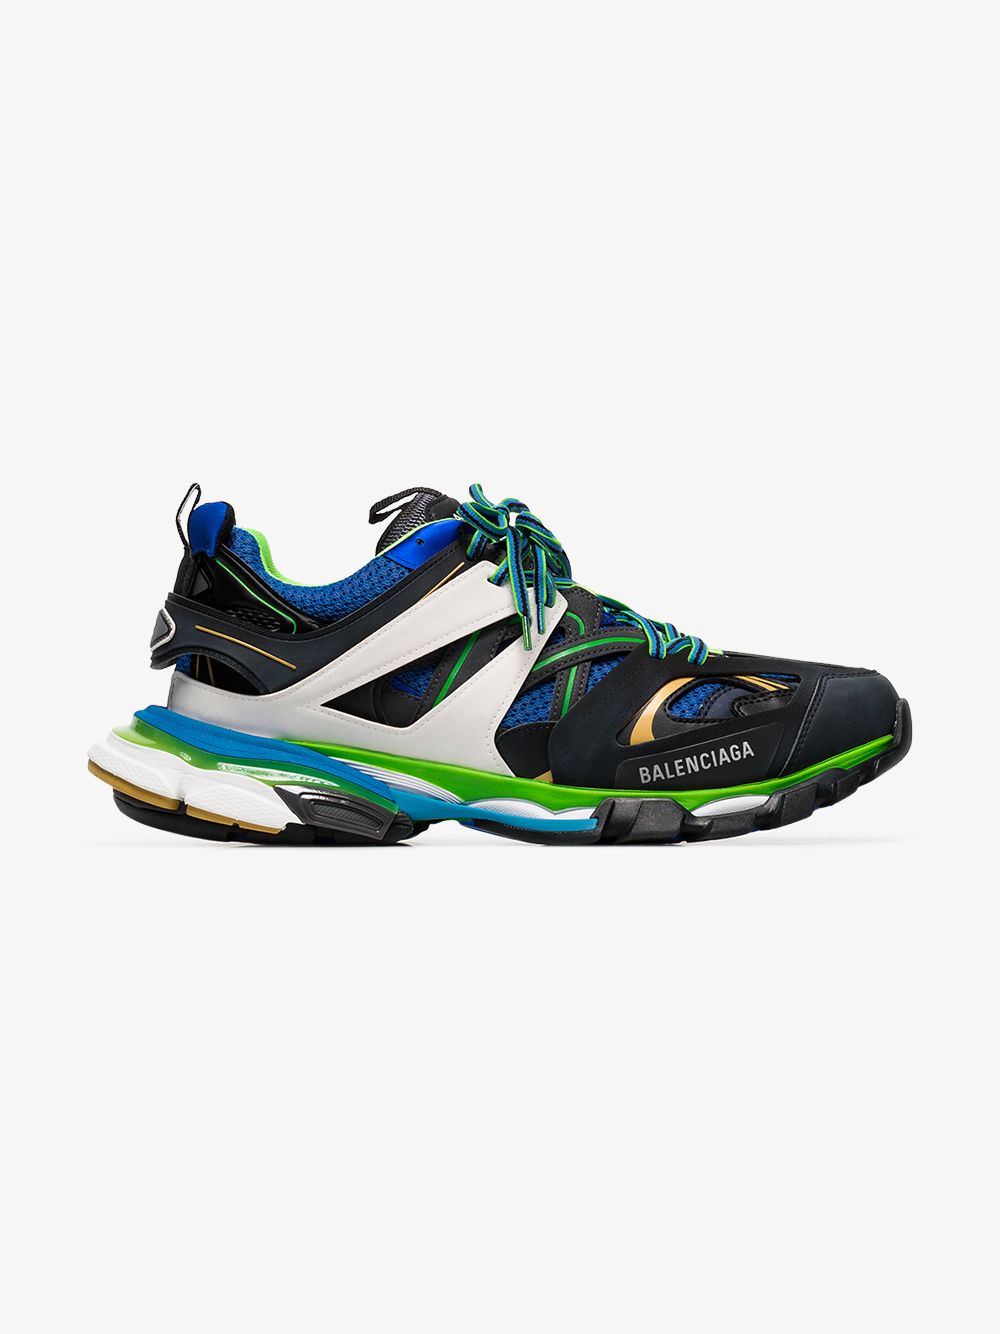 Balenciaga Shoes Track Runner Poshmark